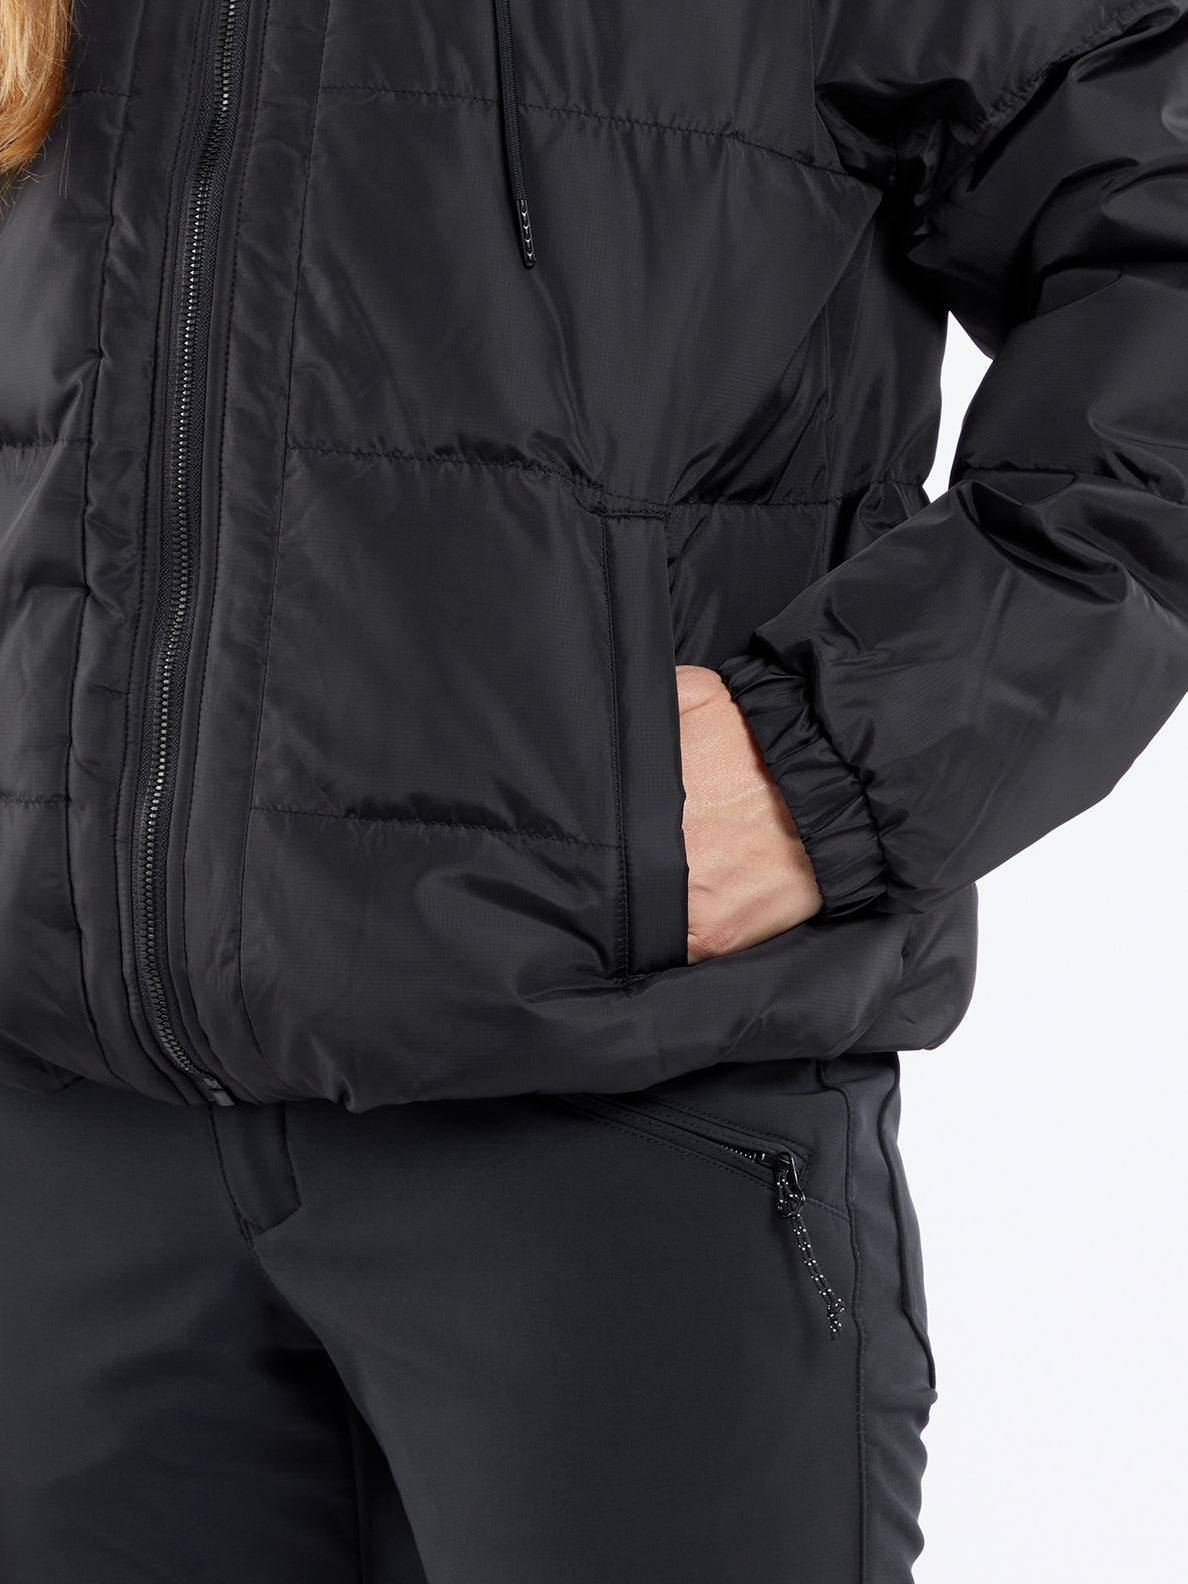 Hudson Insulated Jacket, Women's Black Puff Jacket